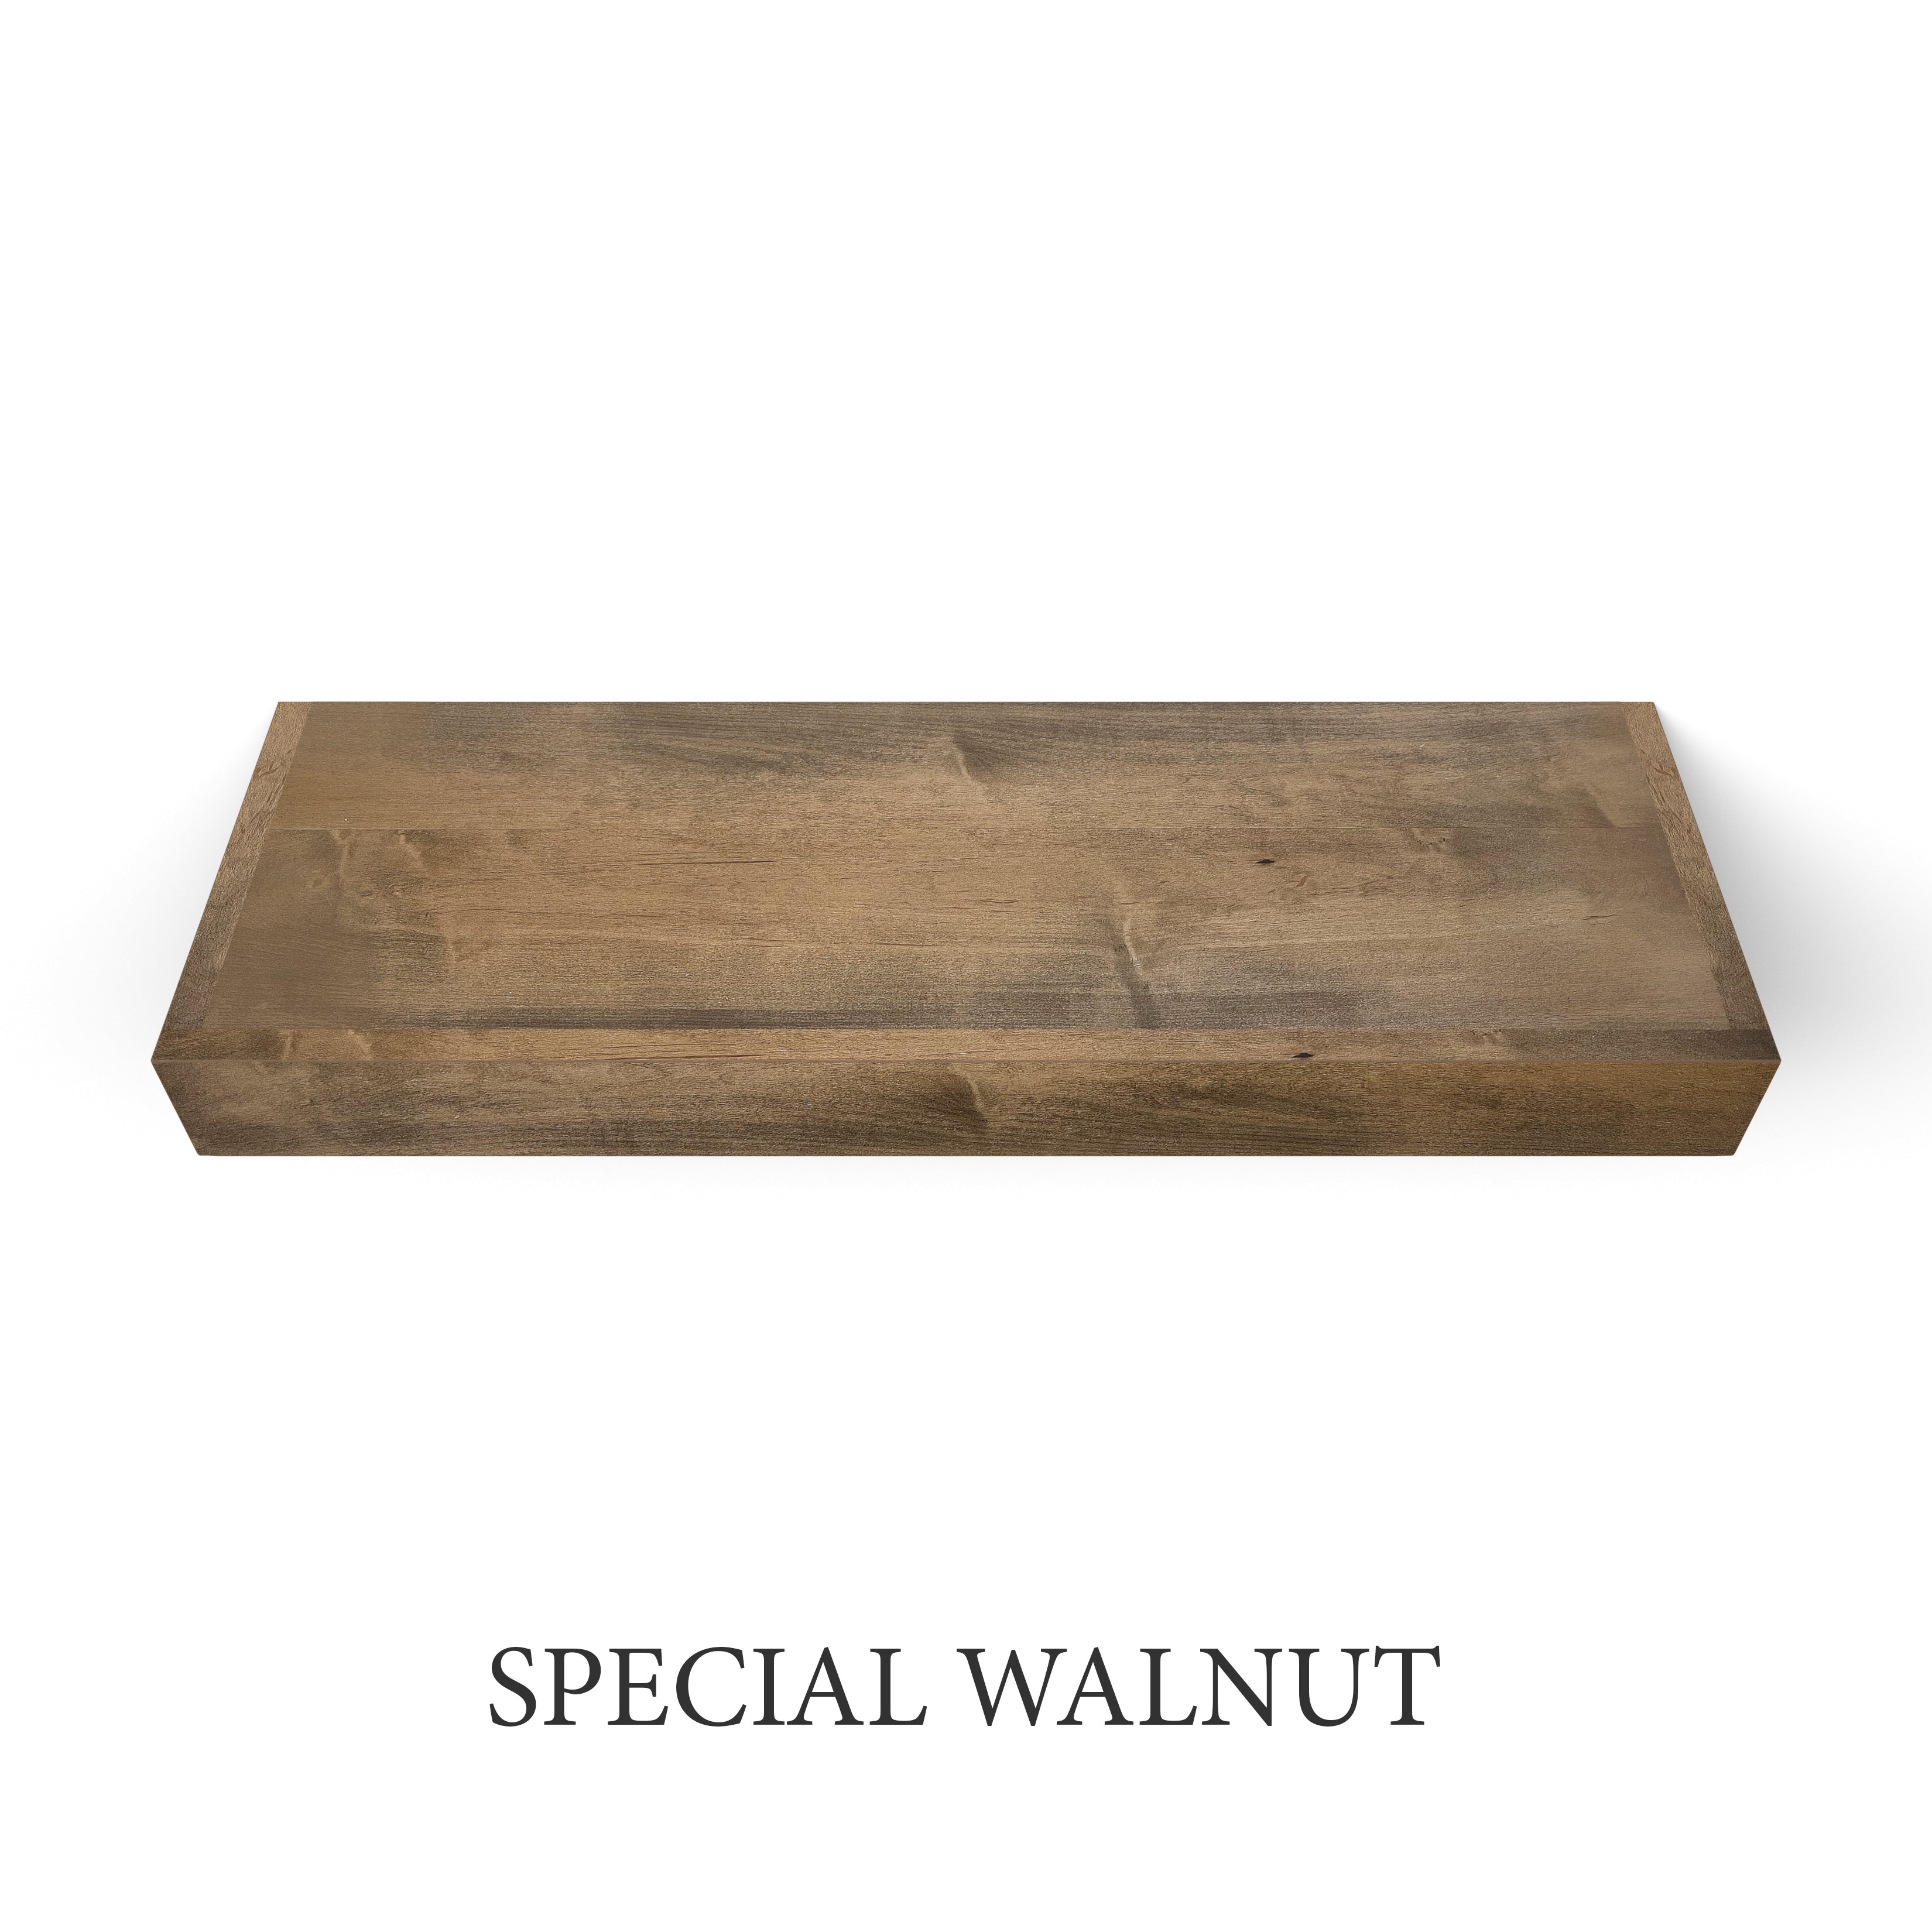 special walnut Maple 3 Inch Thick Floating Shelf